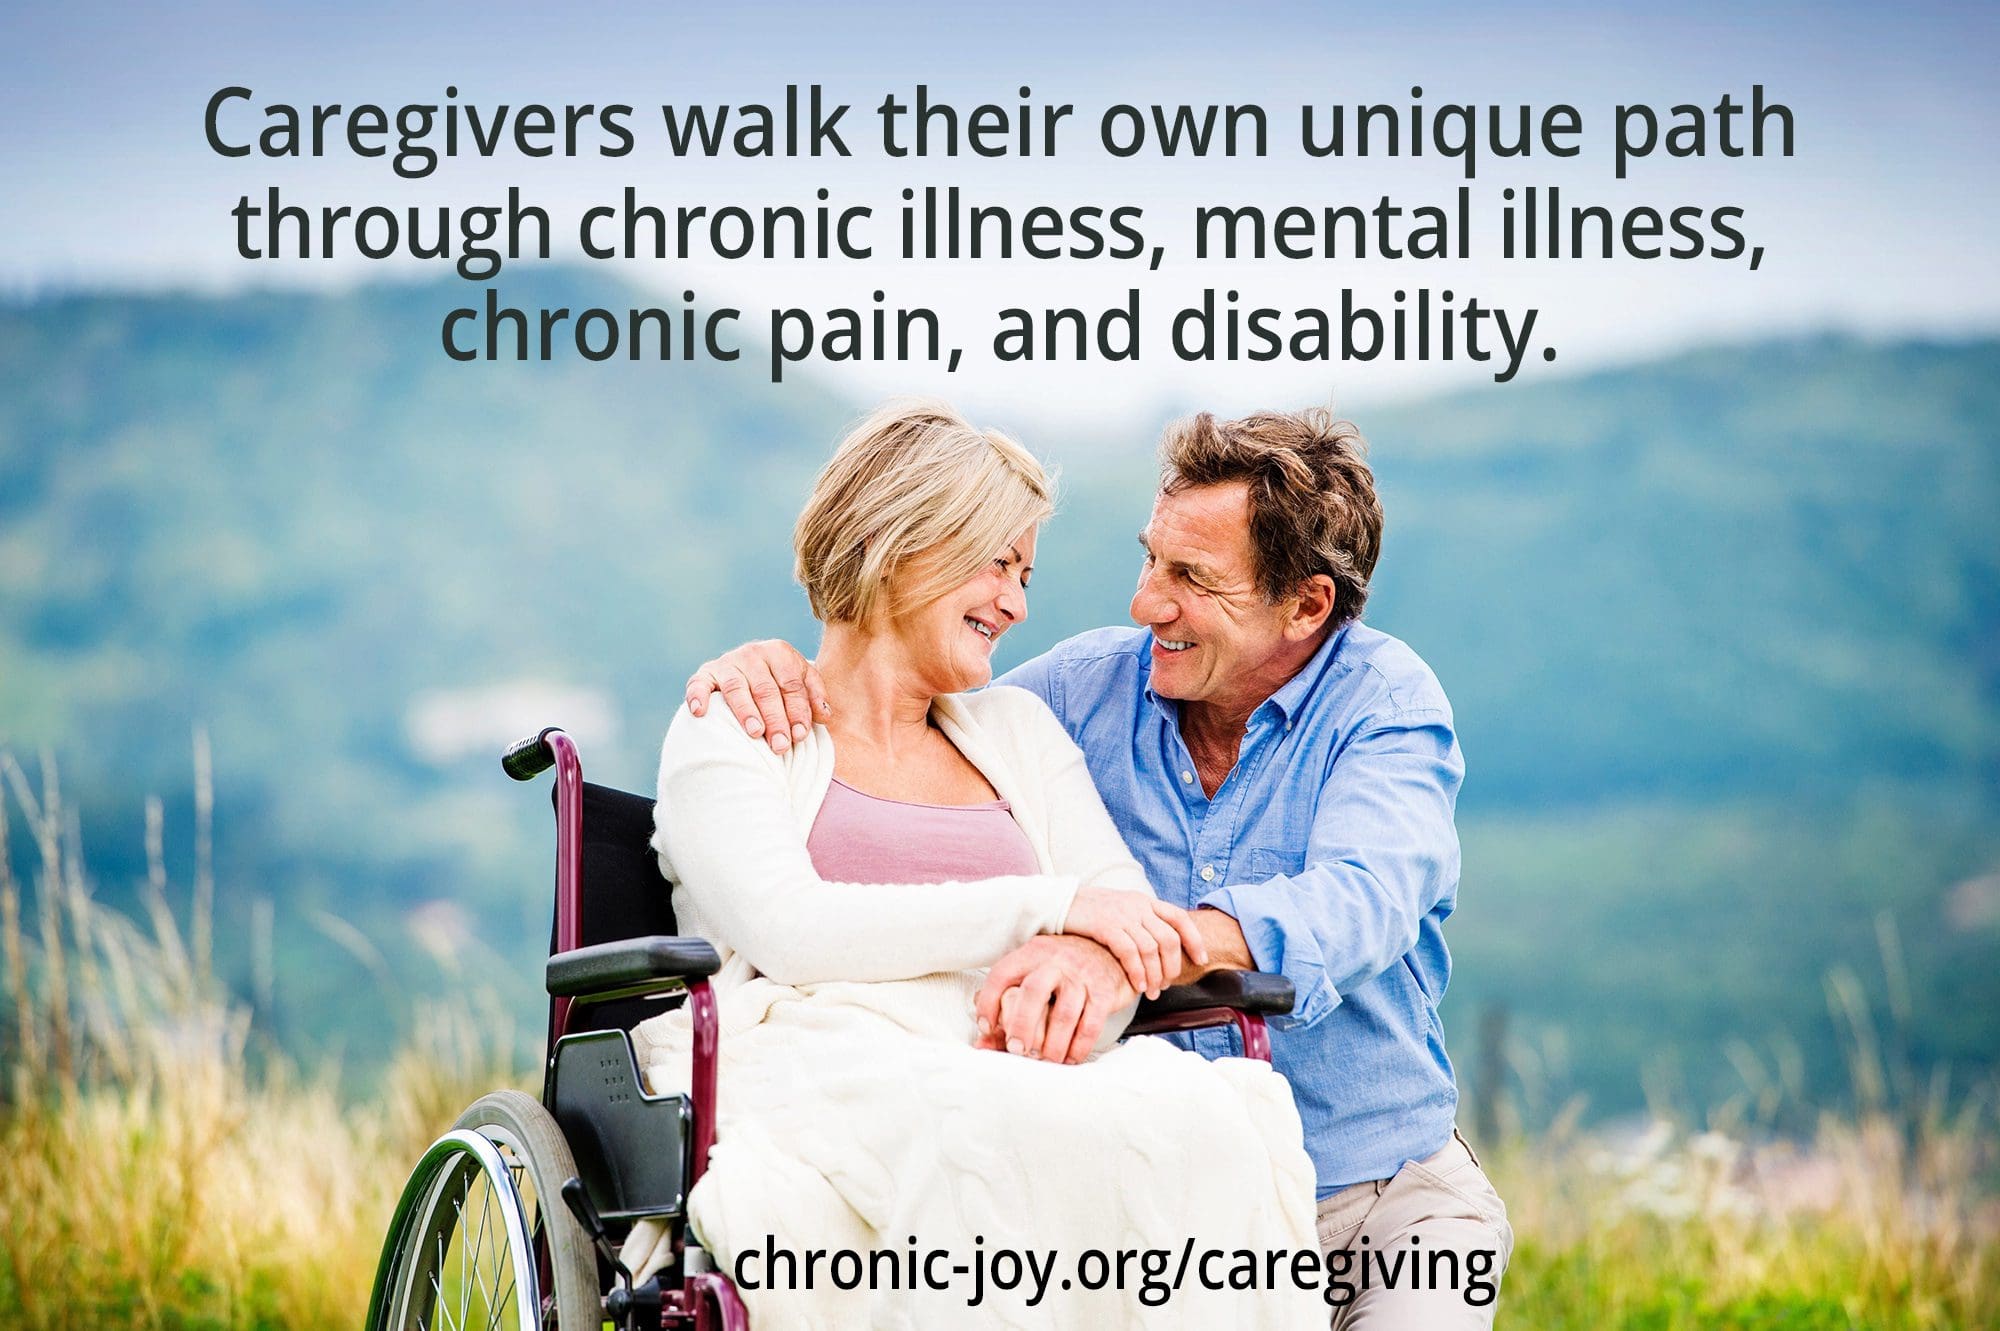 Caregivers walk their own unique path through chronic illness, mental illness, chronic pain, and disability.